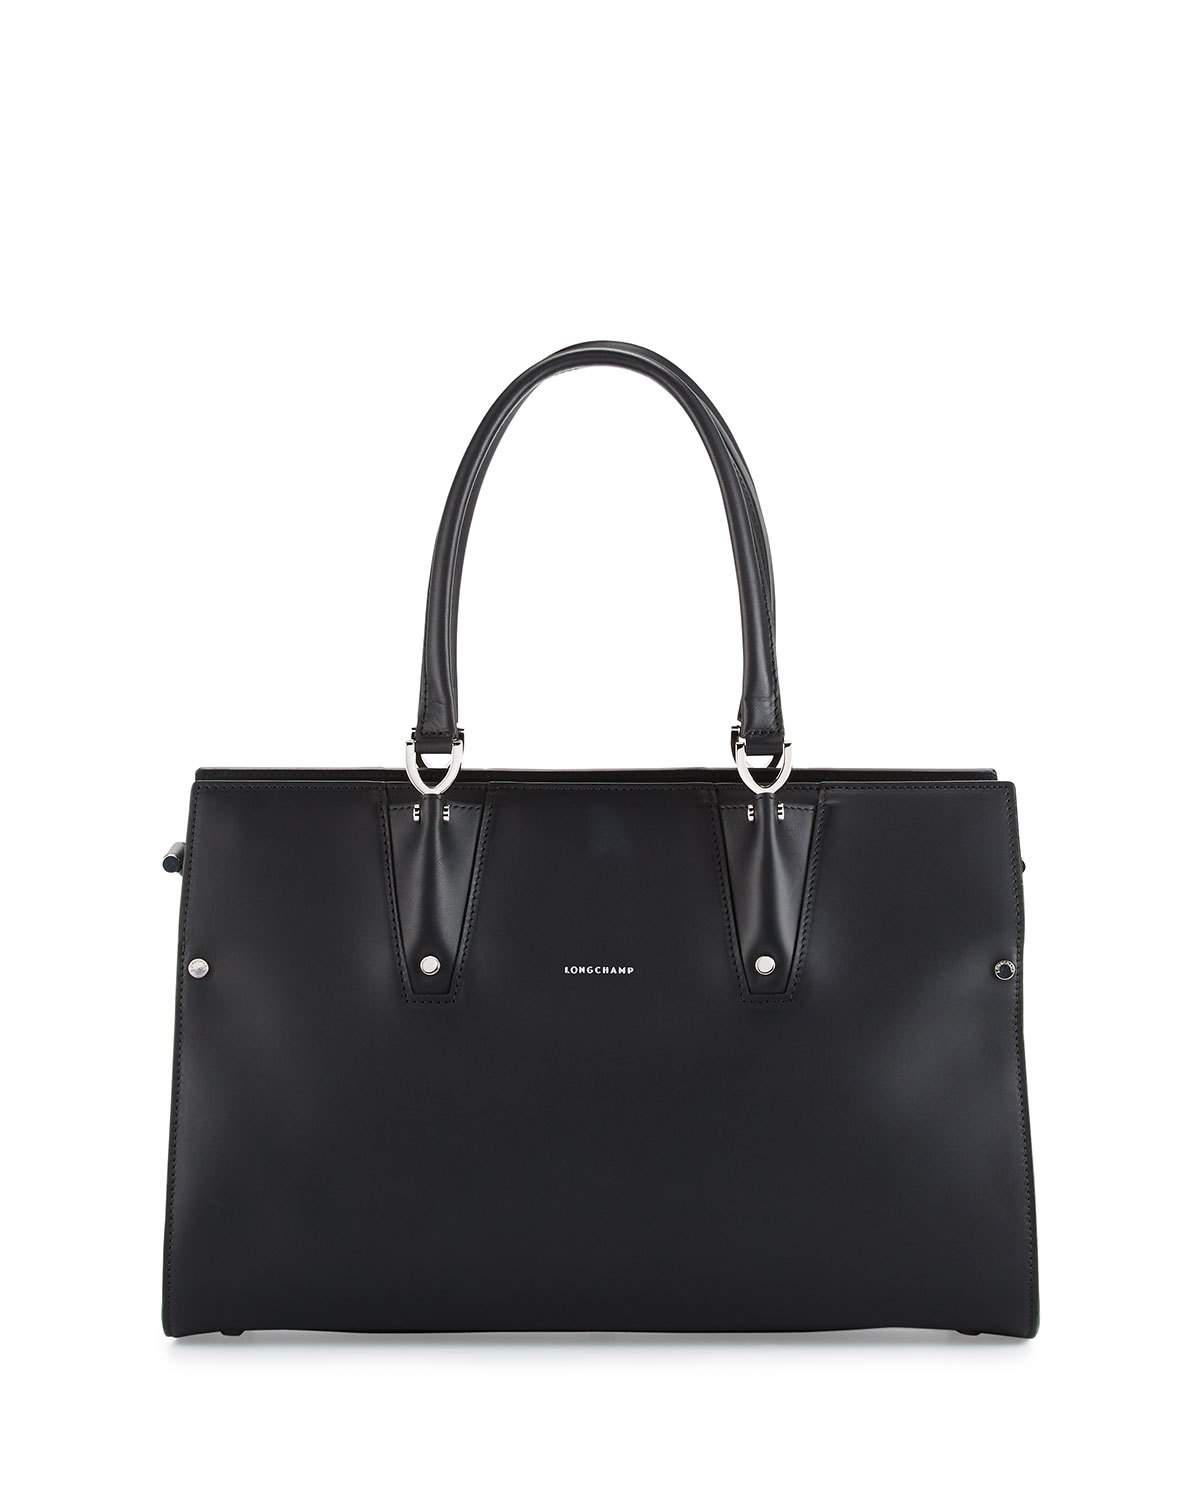 Longchamp Leather Paris Premier Large Tote Bag in Black/Silver (Black) - Lyst